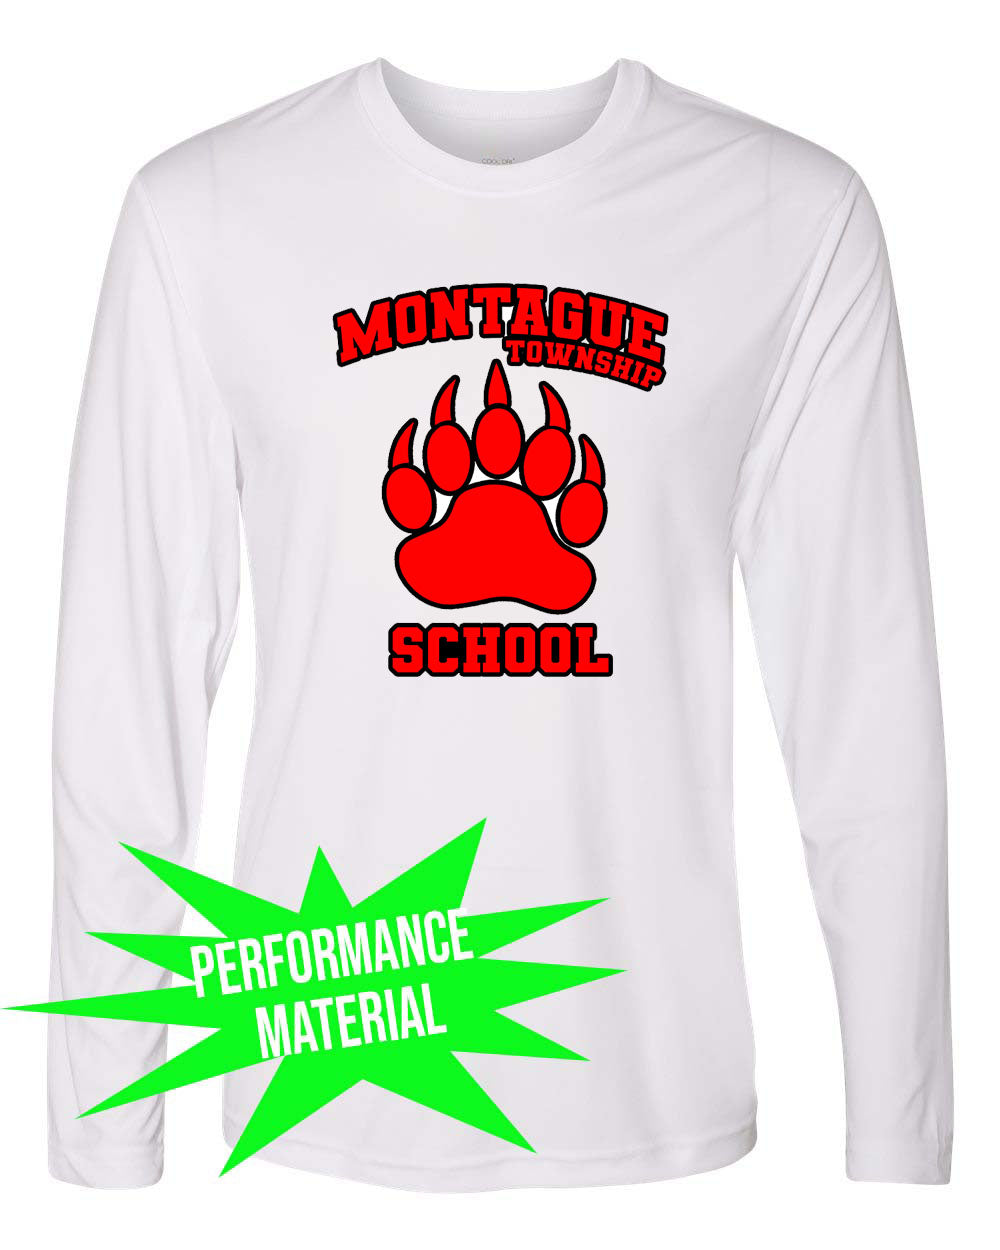 Montague Performance Material Design 2 Long Sleeve Shirt